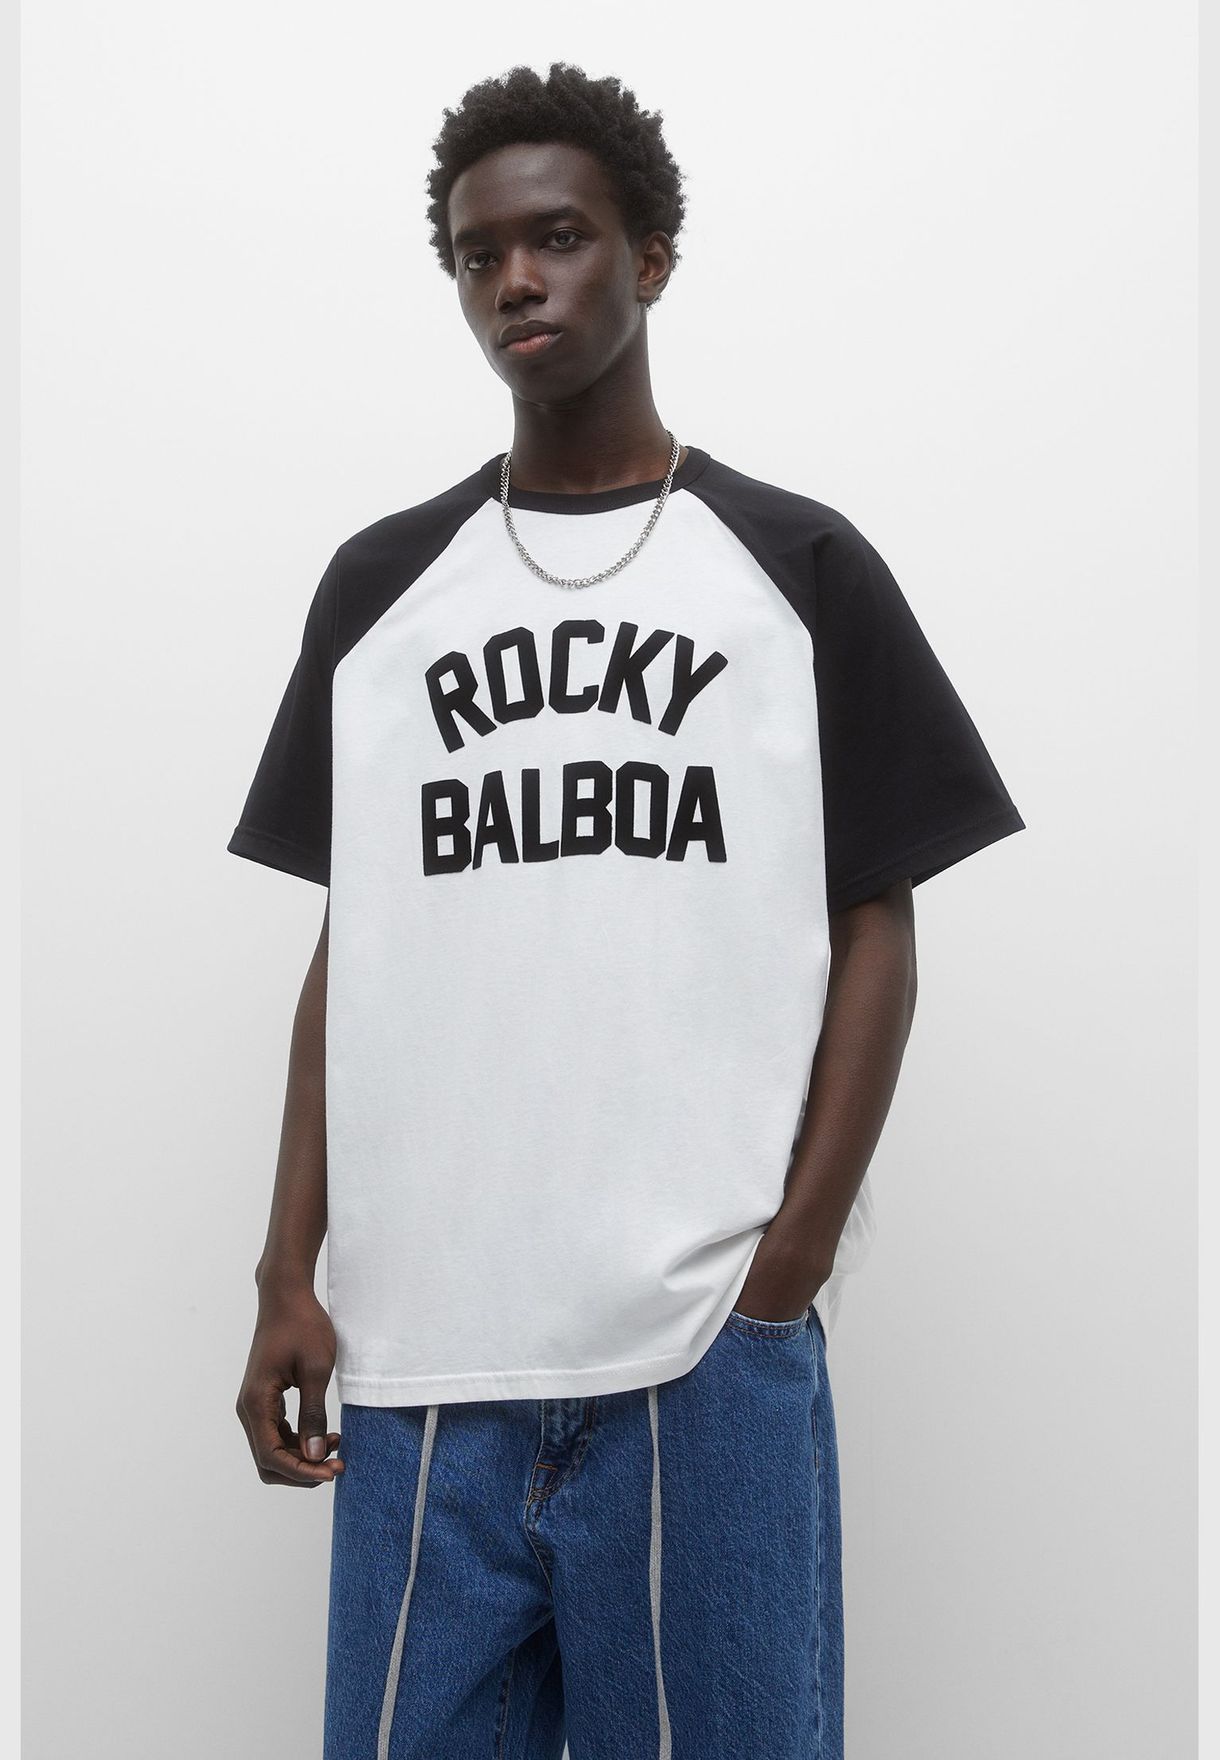 Rocky Balboa raglan sleeve T-shirt